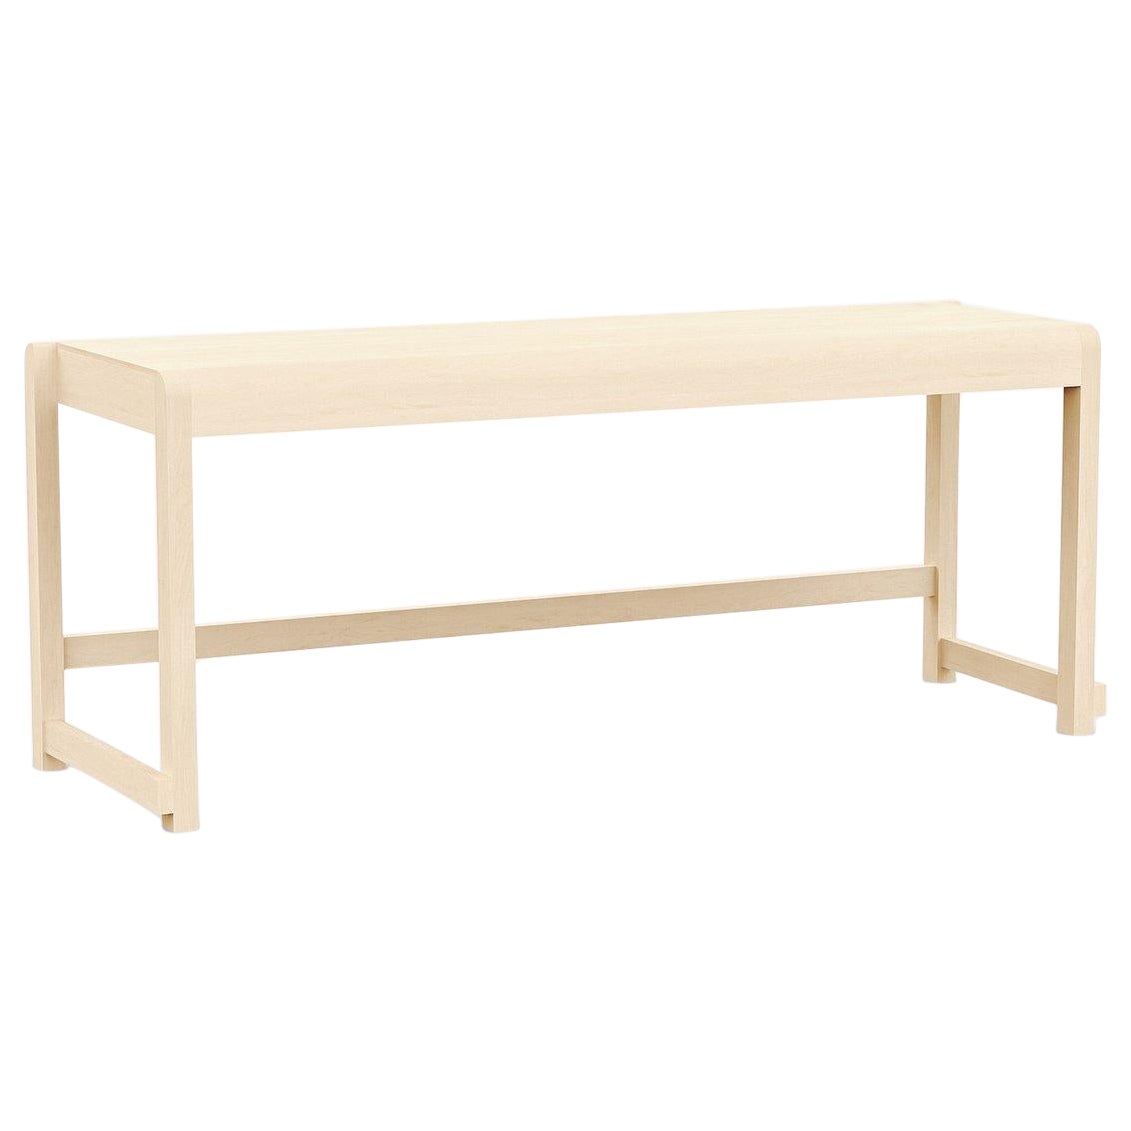 Minimal Scandinavian Design Bench 01 in Natural Wood For Sale